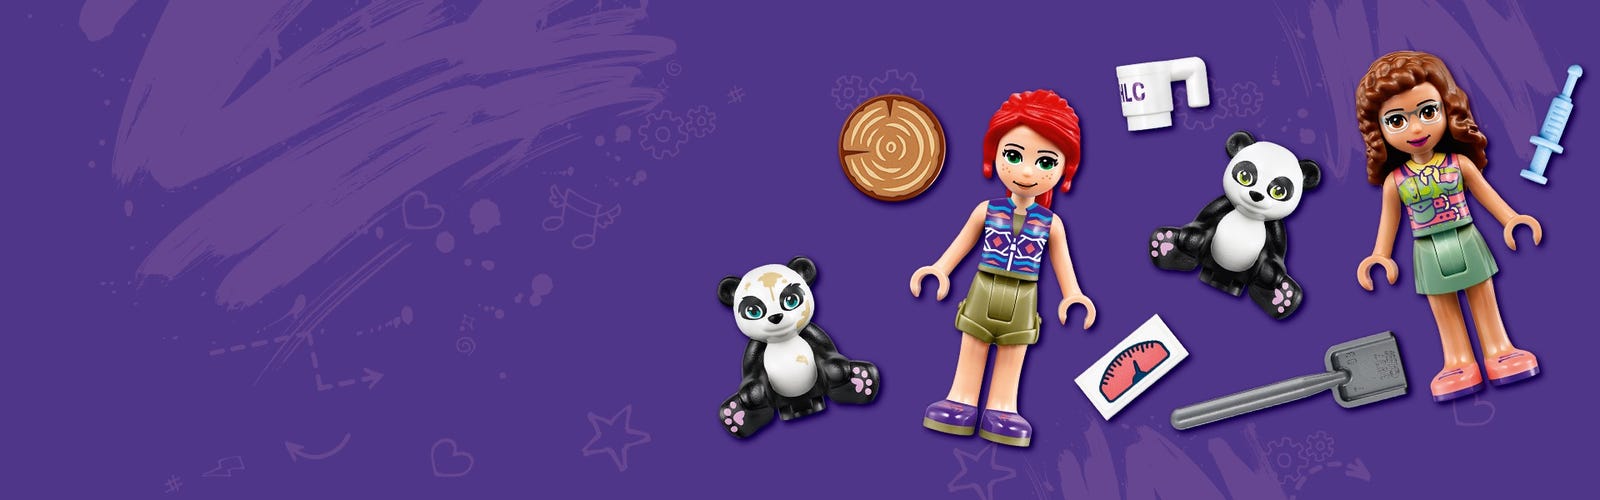  41422 LEGO Friends Panda Jungle Tree House ***2020*** (JULY) :  Toys & Games